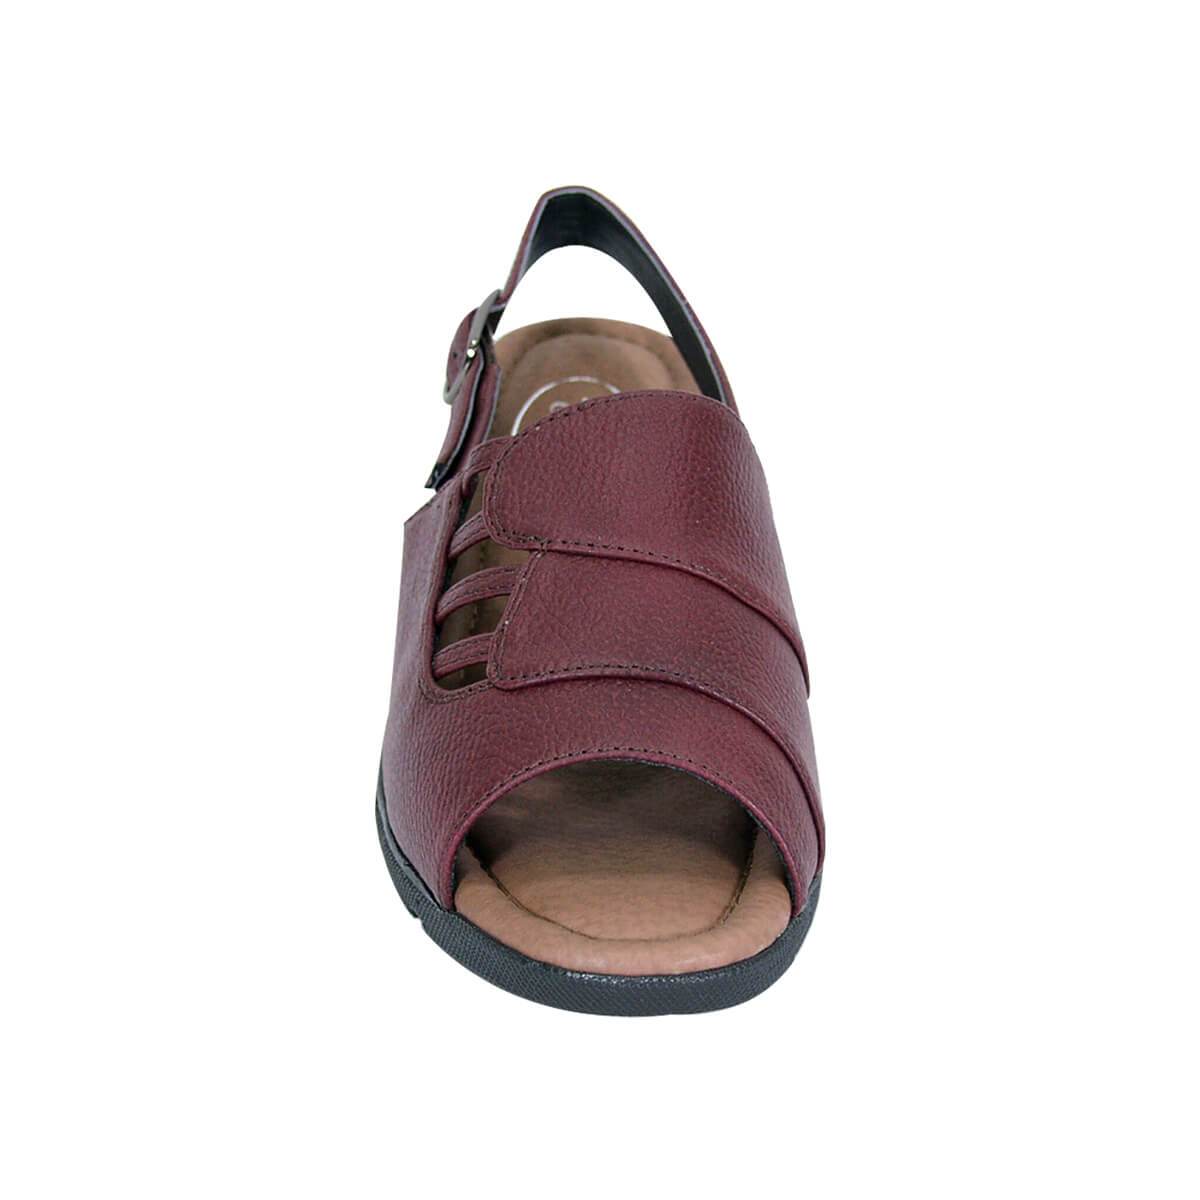 24 HOUR COMFORT Selina Women's Wide Width Leather Sandals